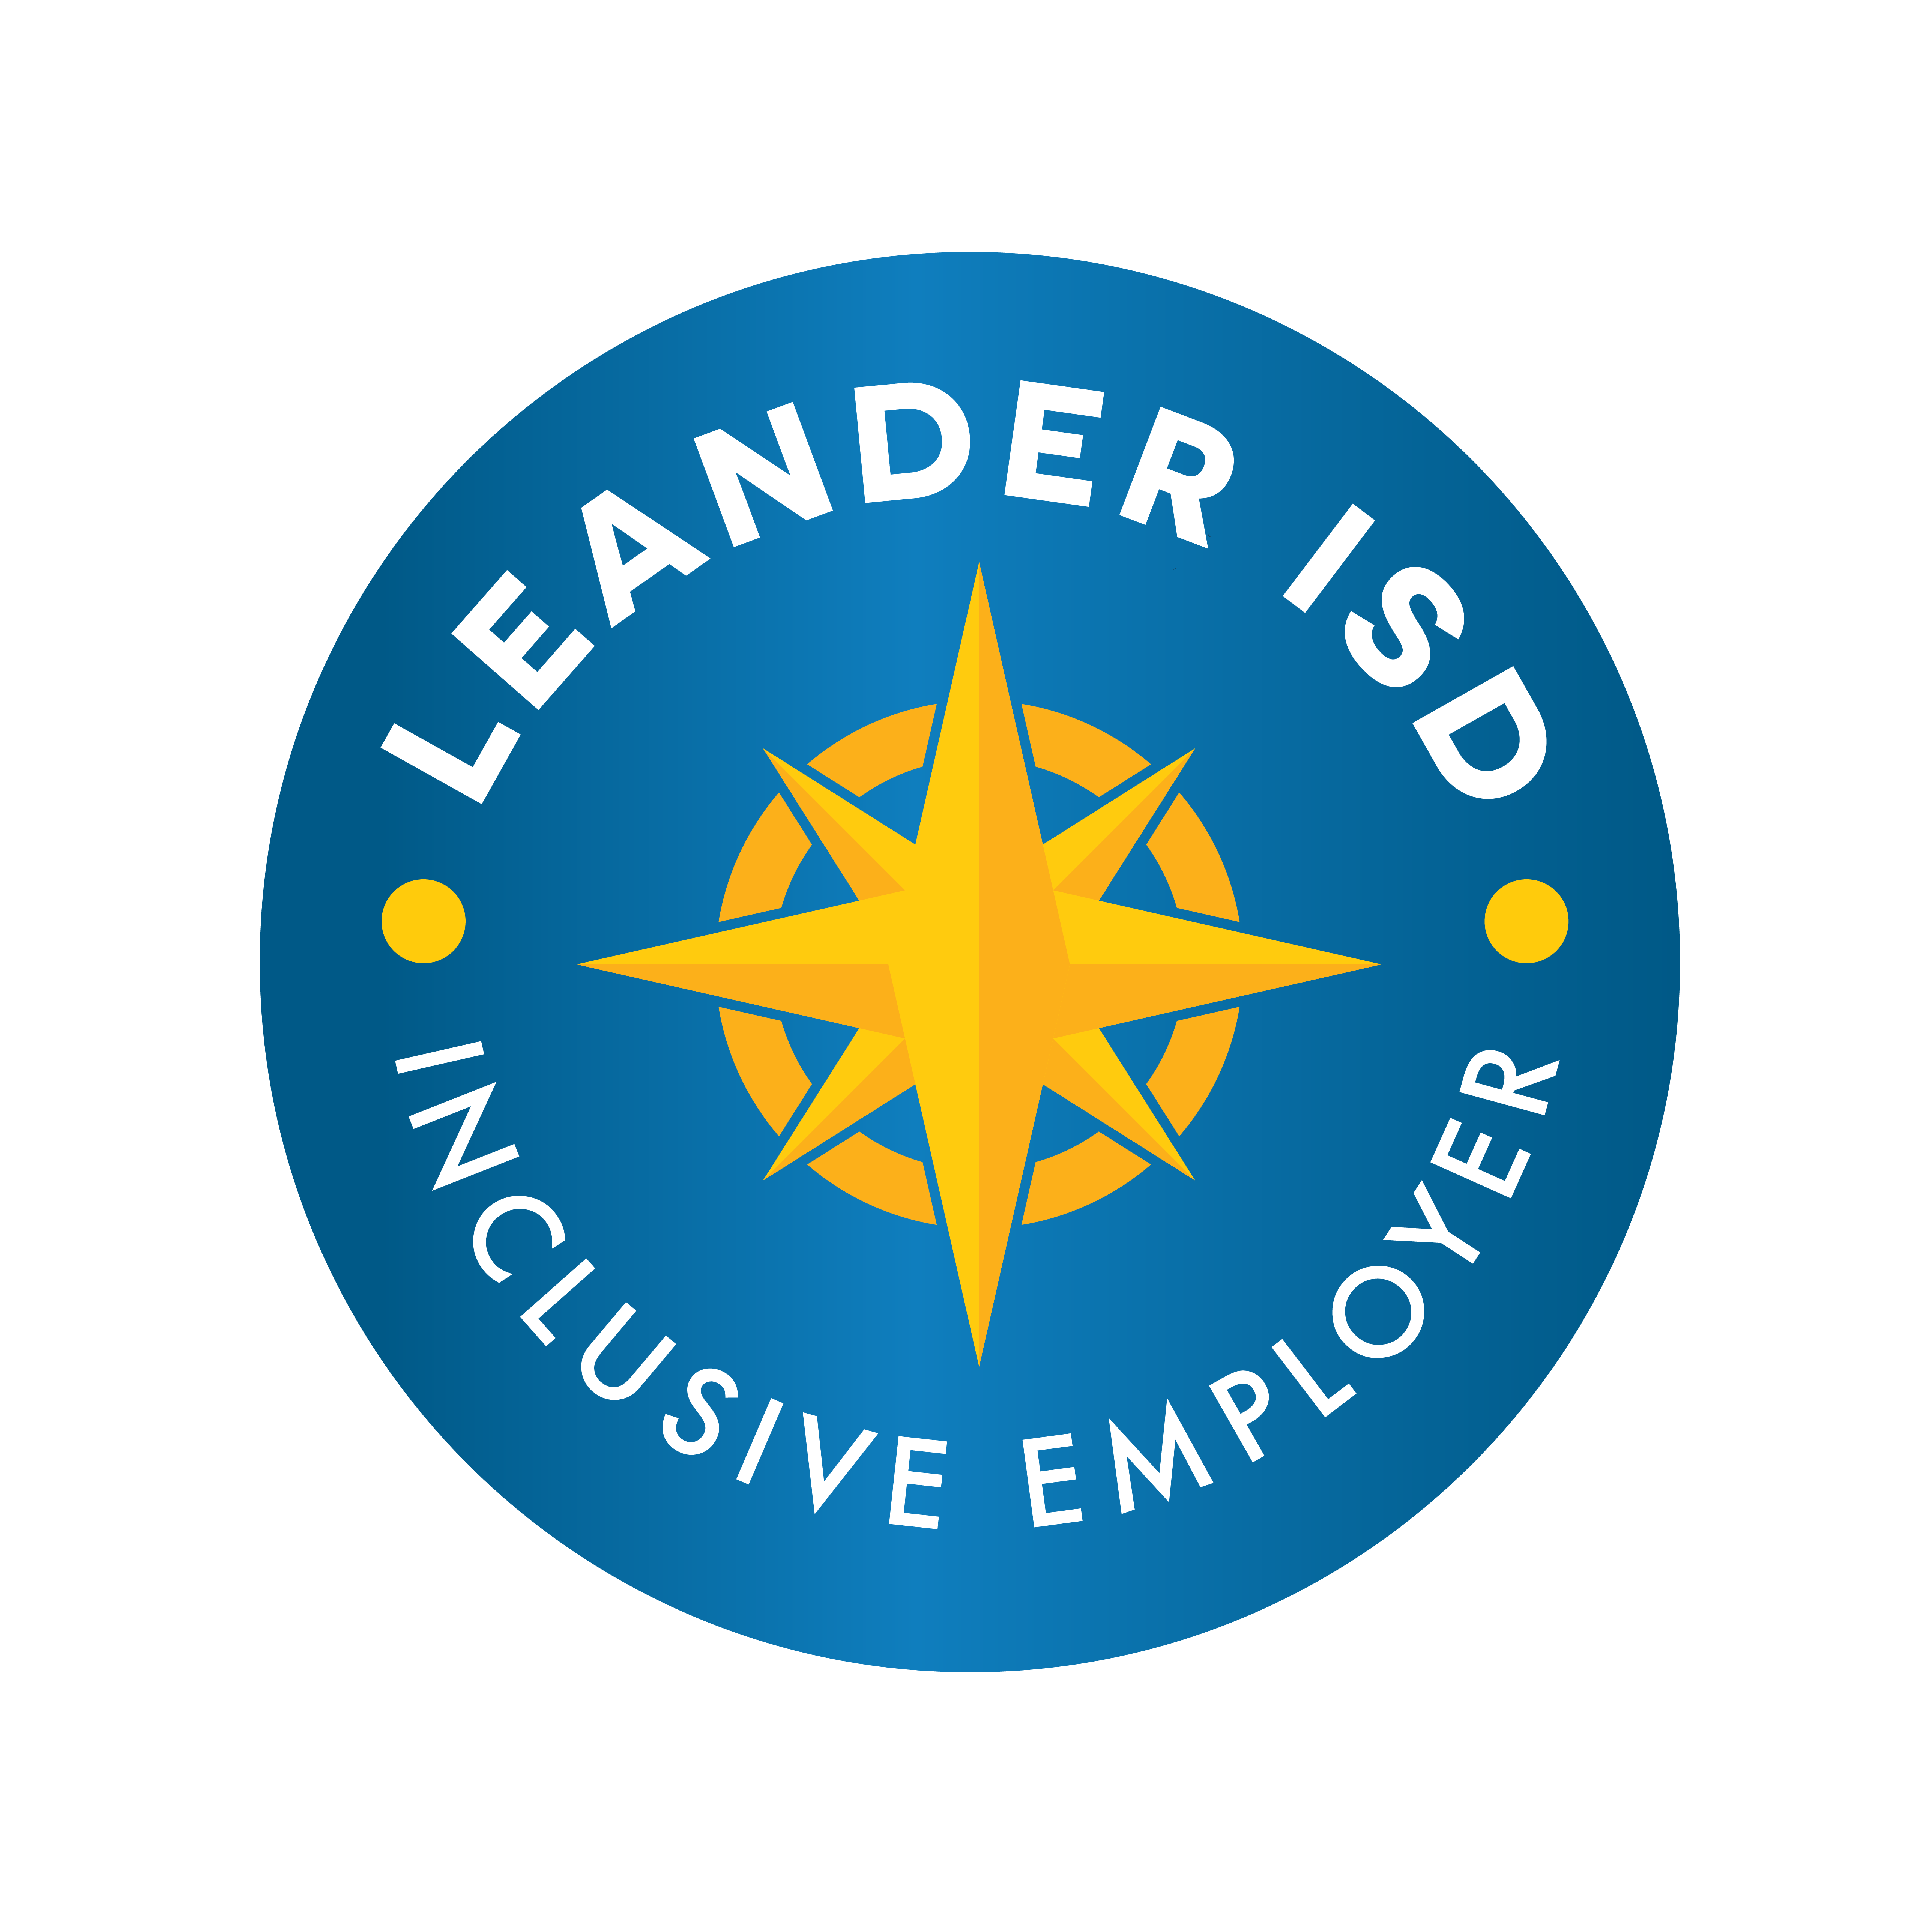 LISD Inclusive Employer